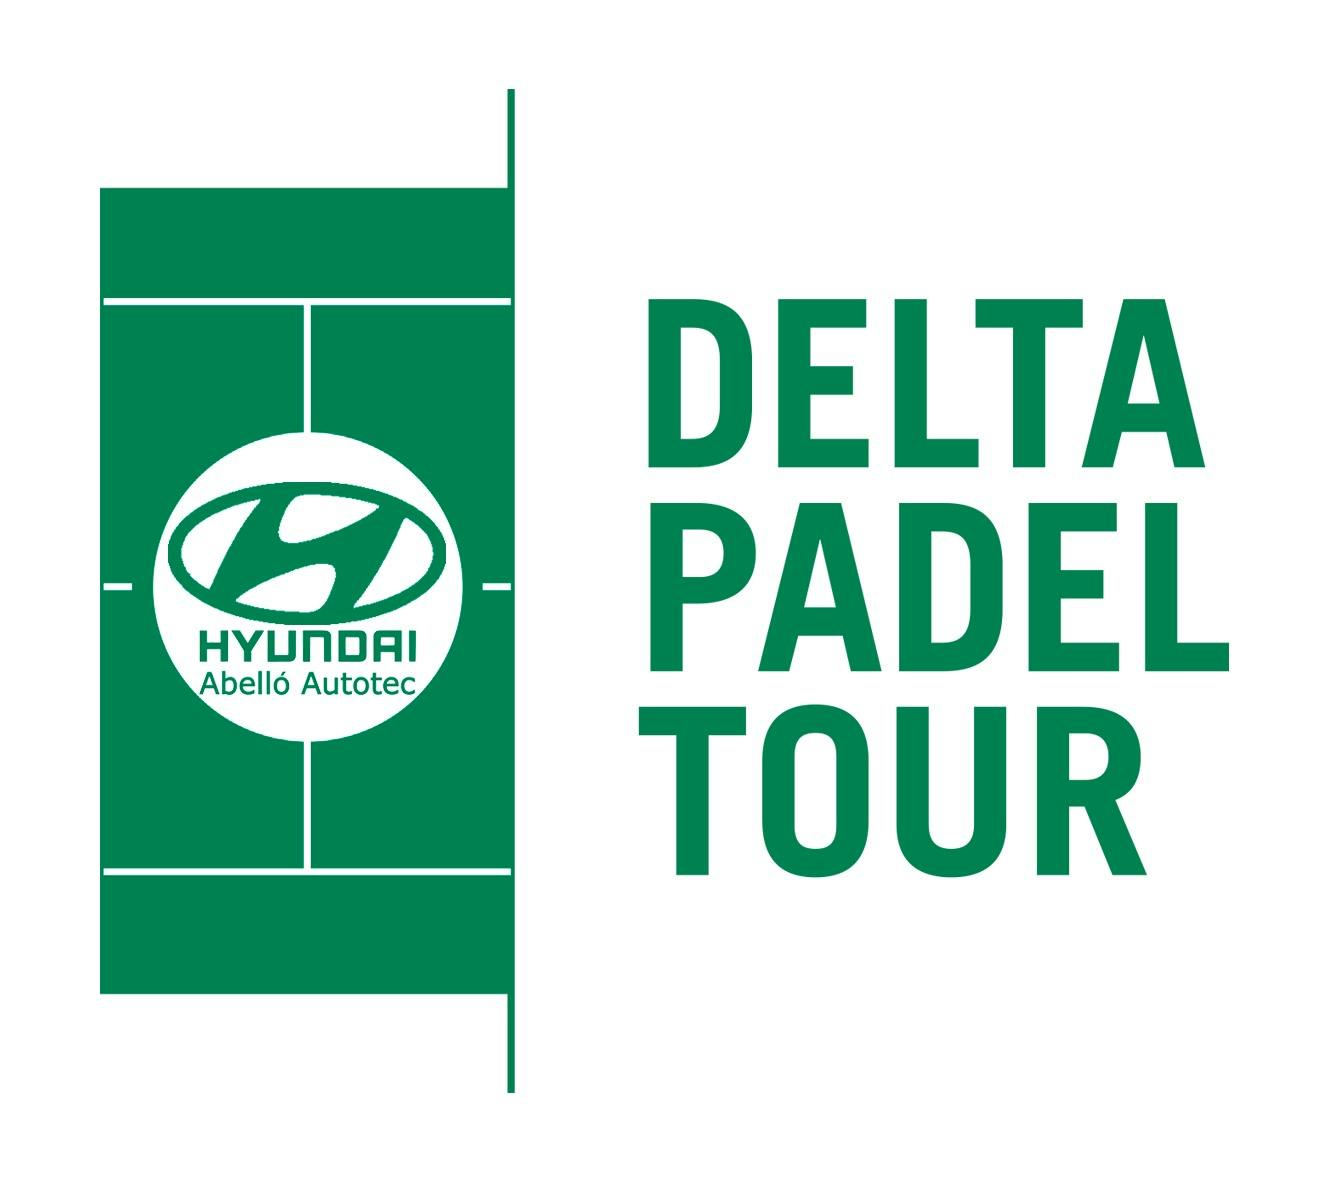 Delta padel tour - 3